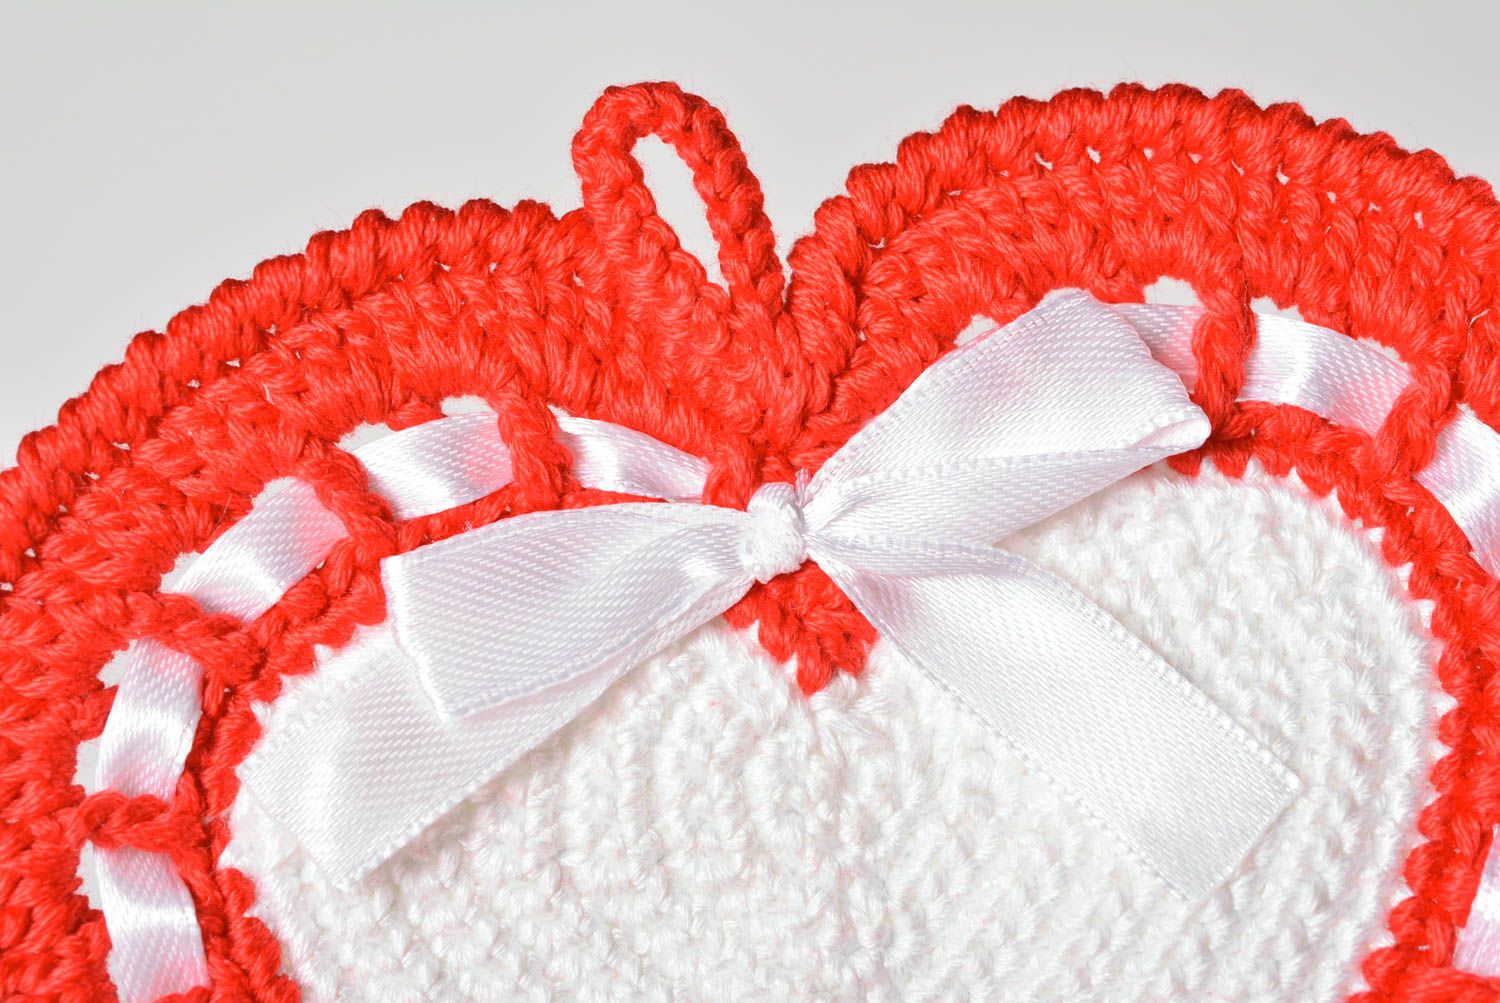 Handmade hot pad designer hot pad crochet hot pad kitchen accessory gift ideas photo 3